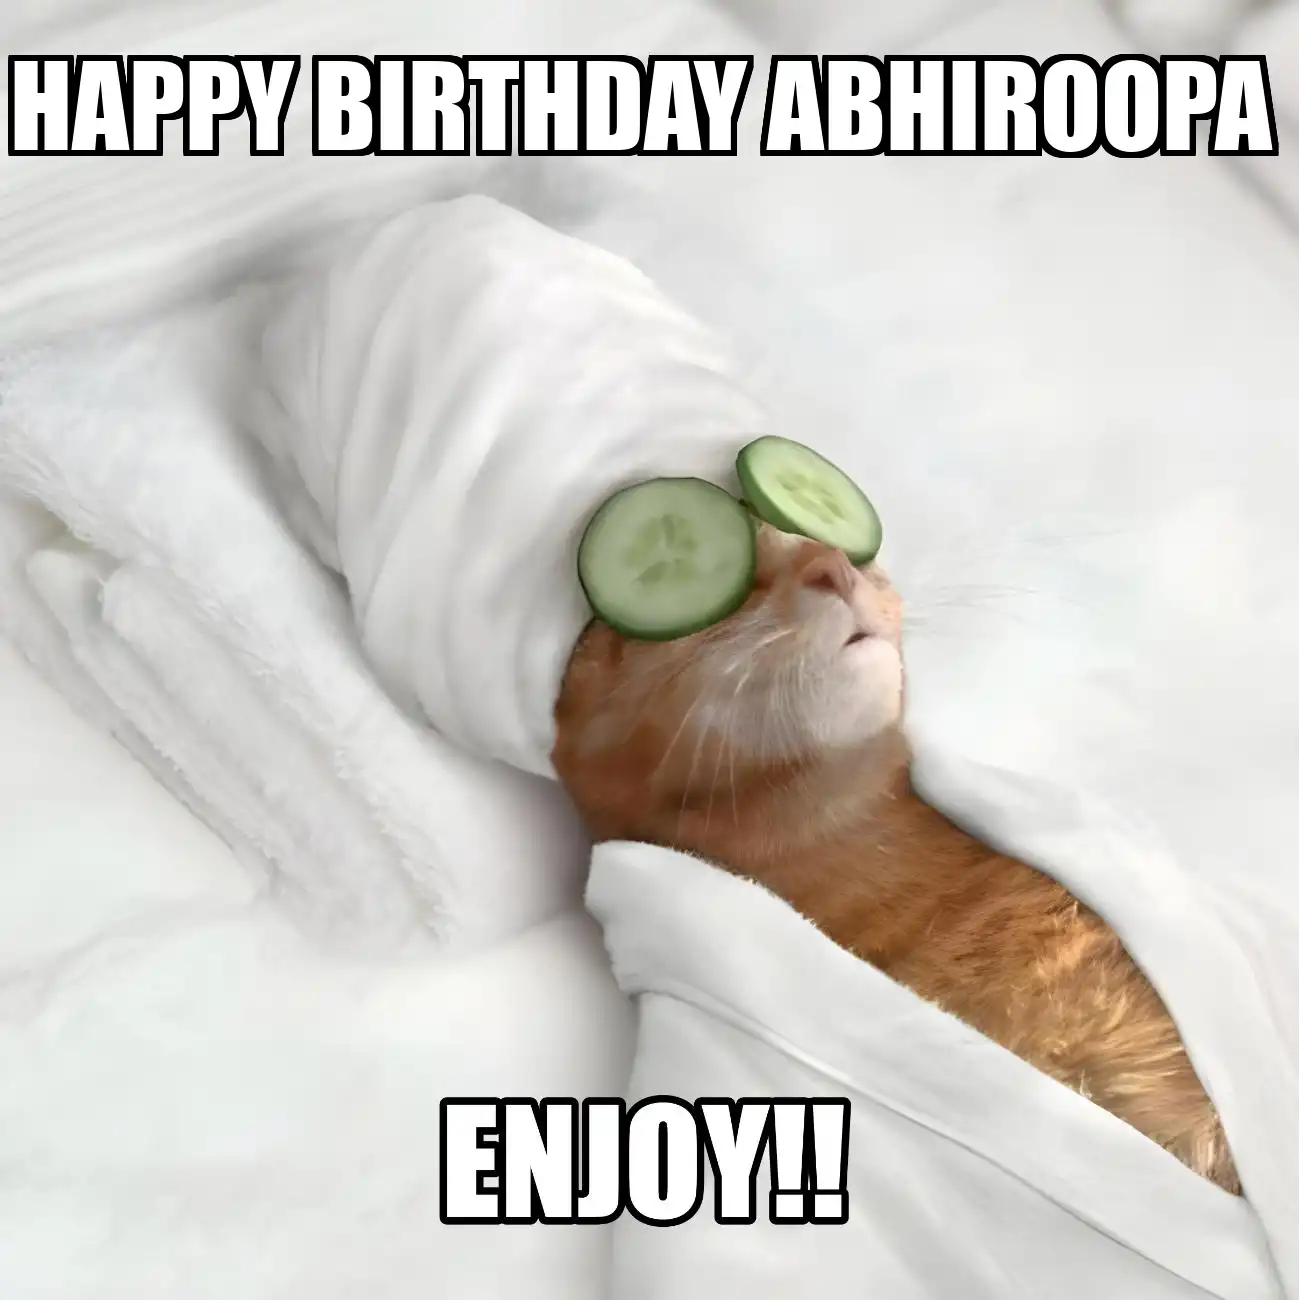 Happy Birthday Abhiroopa Enjoy Cat Meme